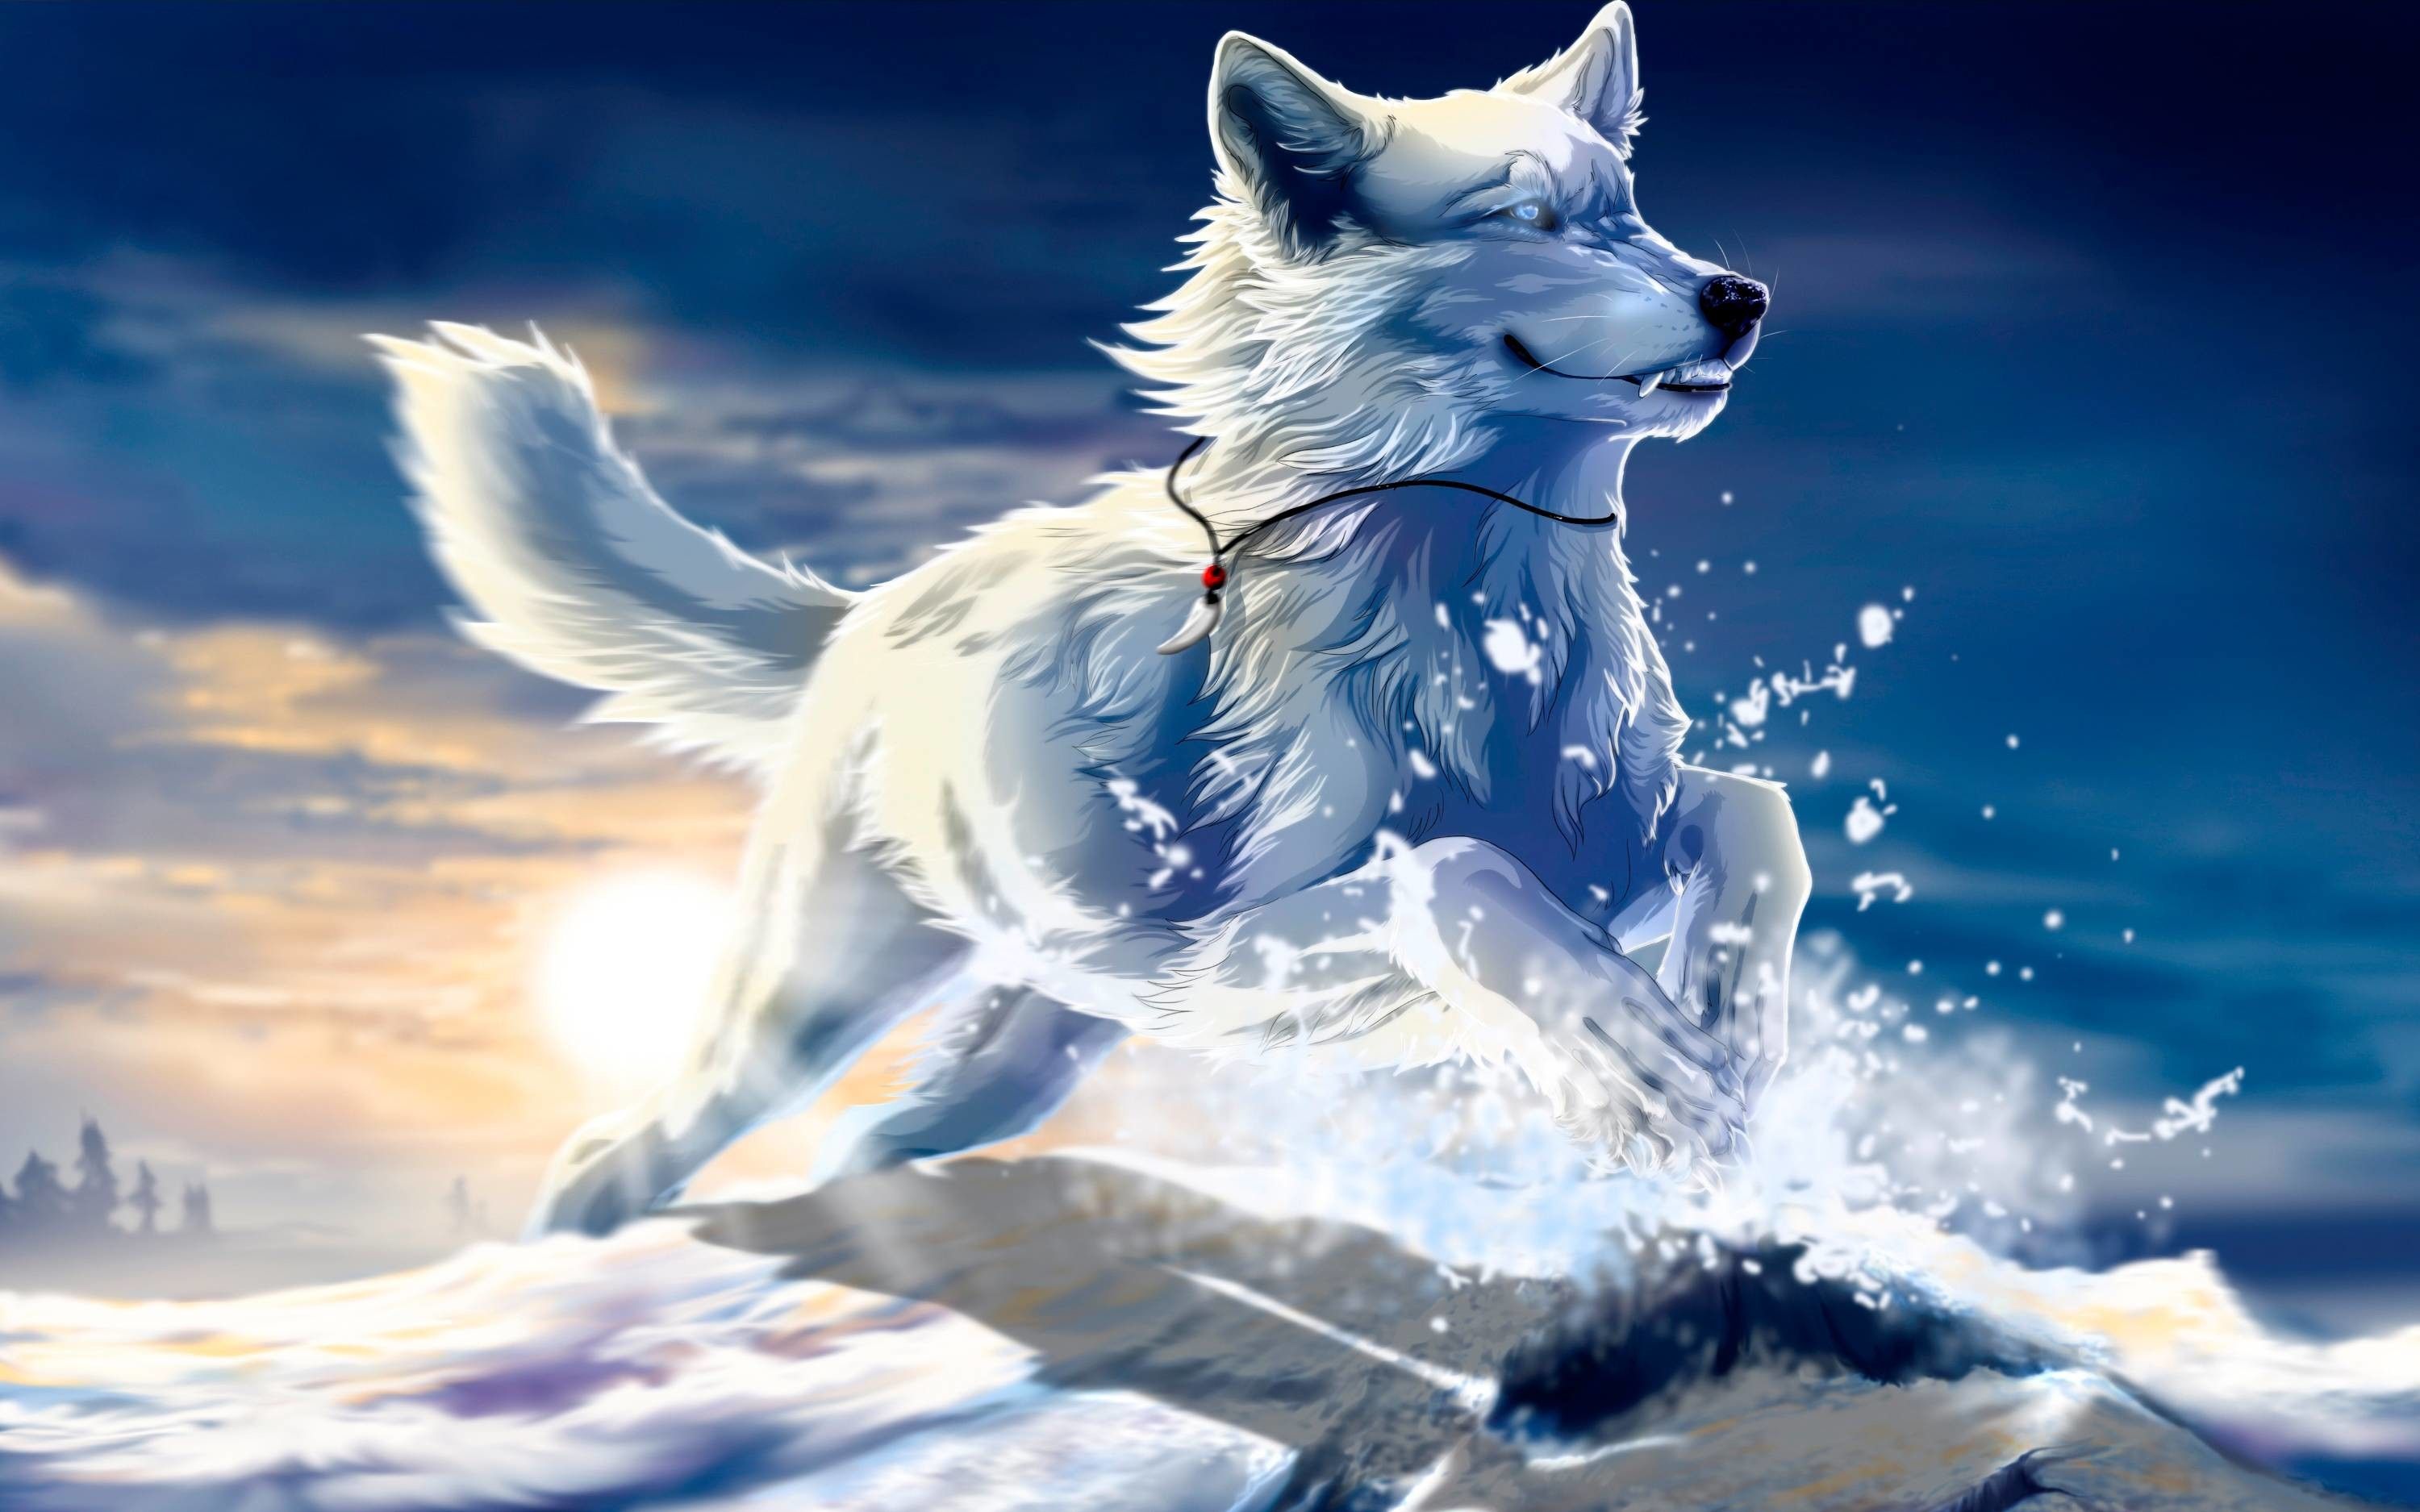 Anime Wolf GIFs | Tenor